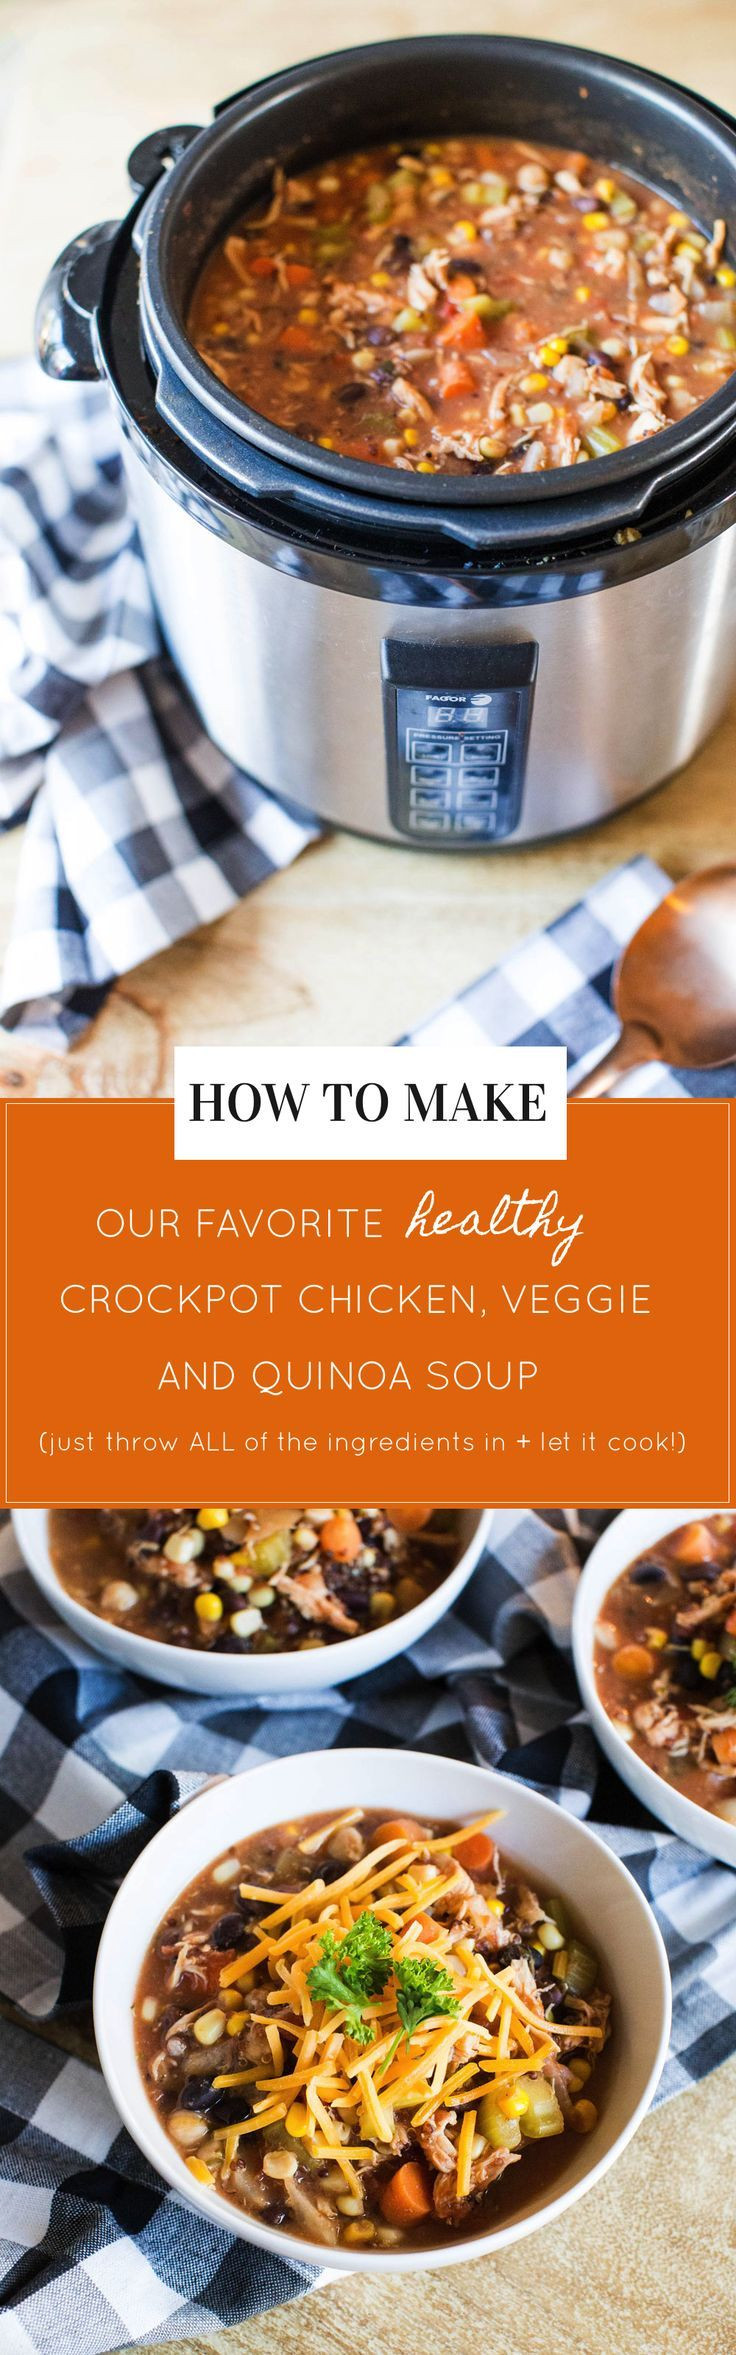 Heart Healthy Instant Pot Recipes
 Best 25 Heart healthy crockpot recipes ideas on Pinterest